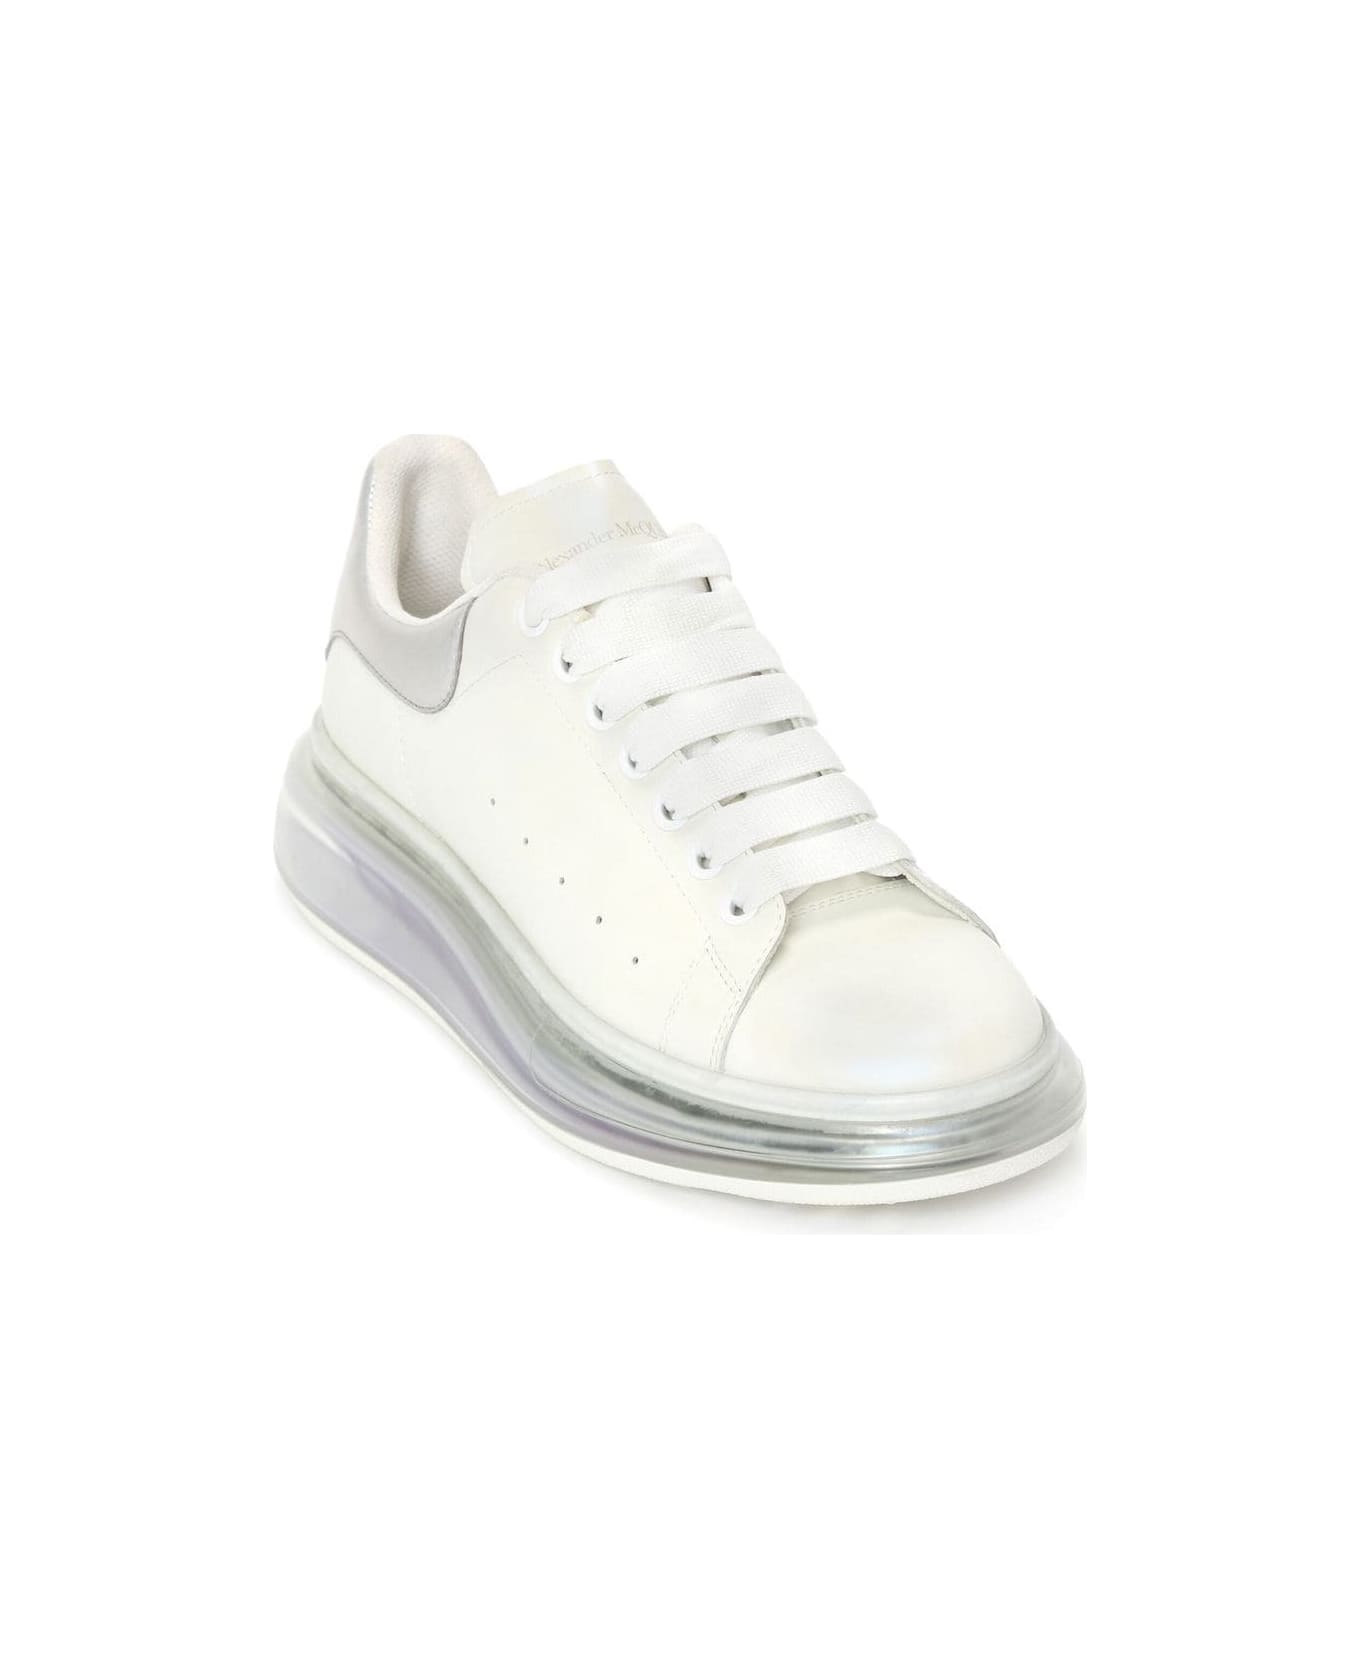 Alexander McQueen Leather Sneakers With Silver Heel - Bianco スニーカー